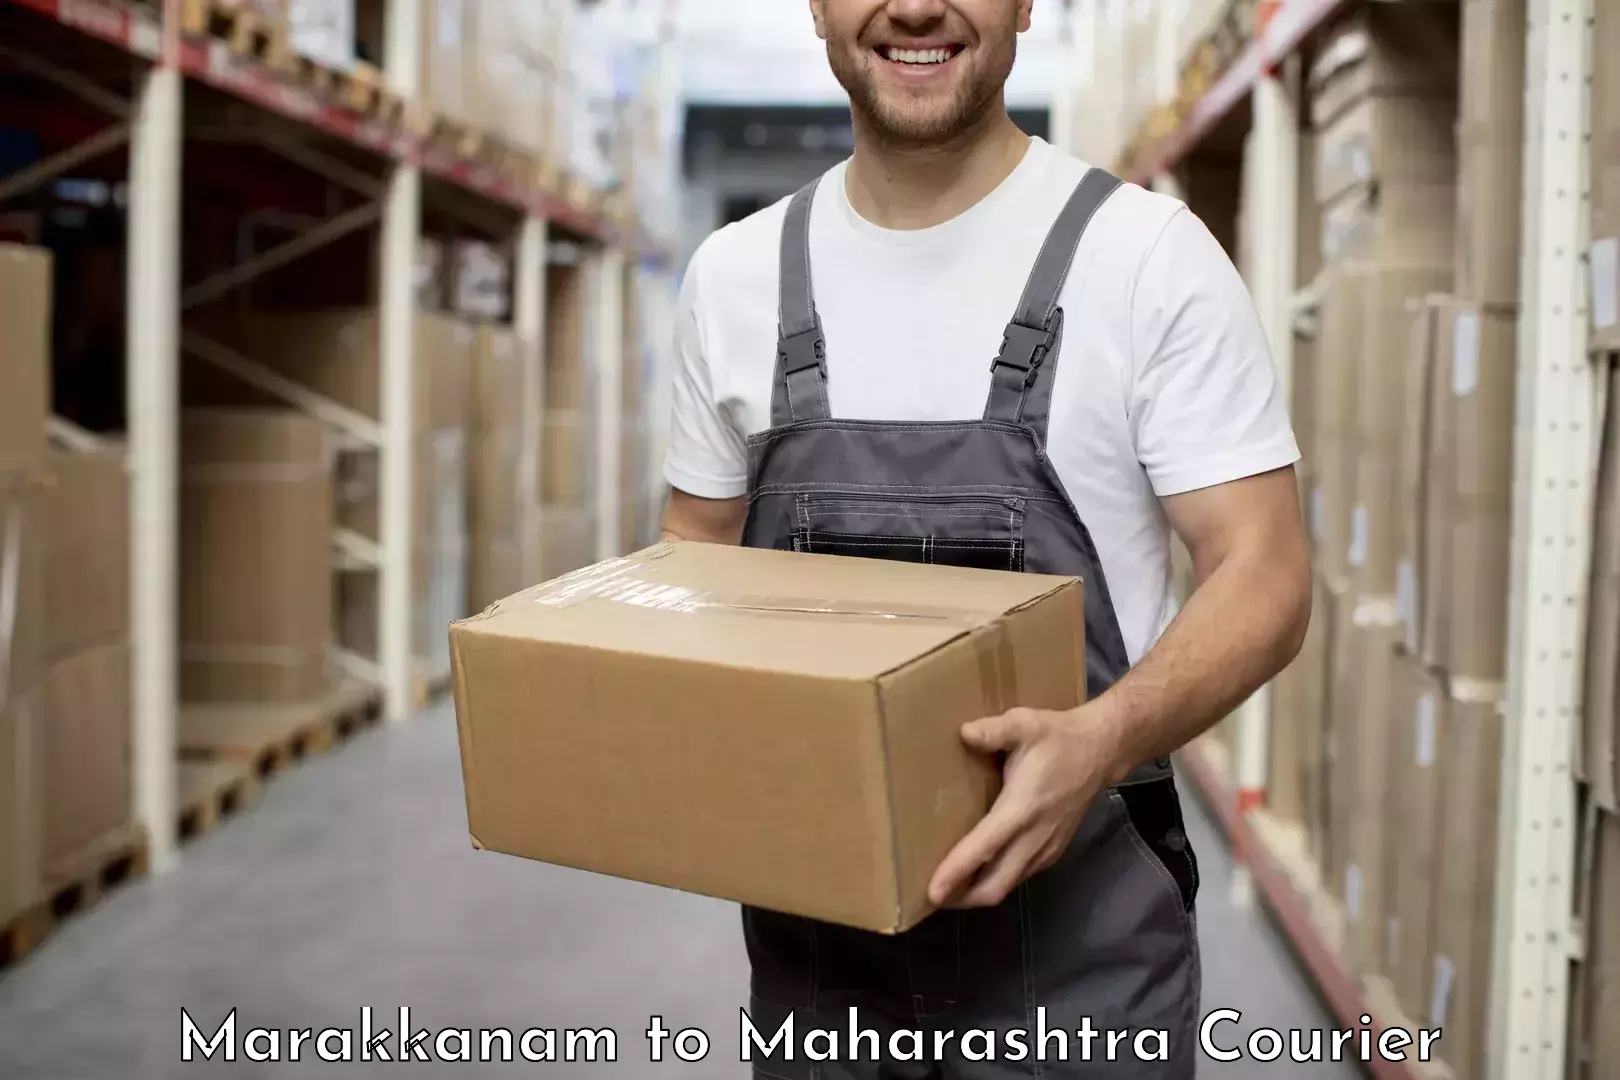 Cash on delivery service Marakkanam to Shrigonda